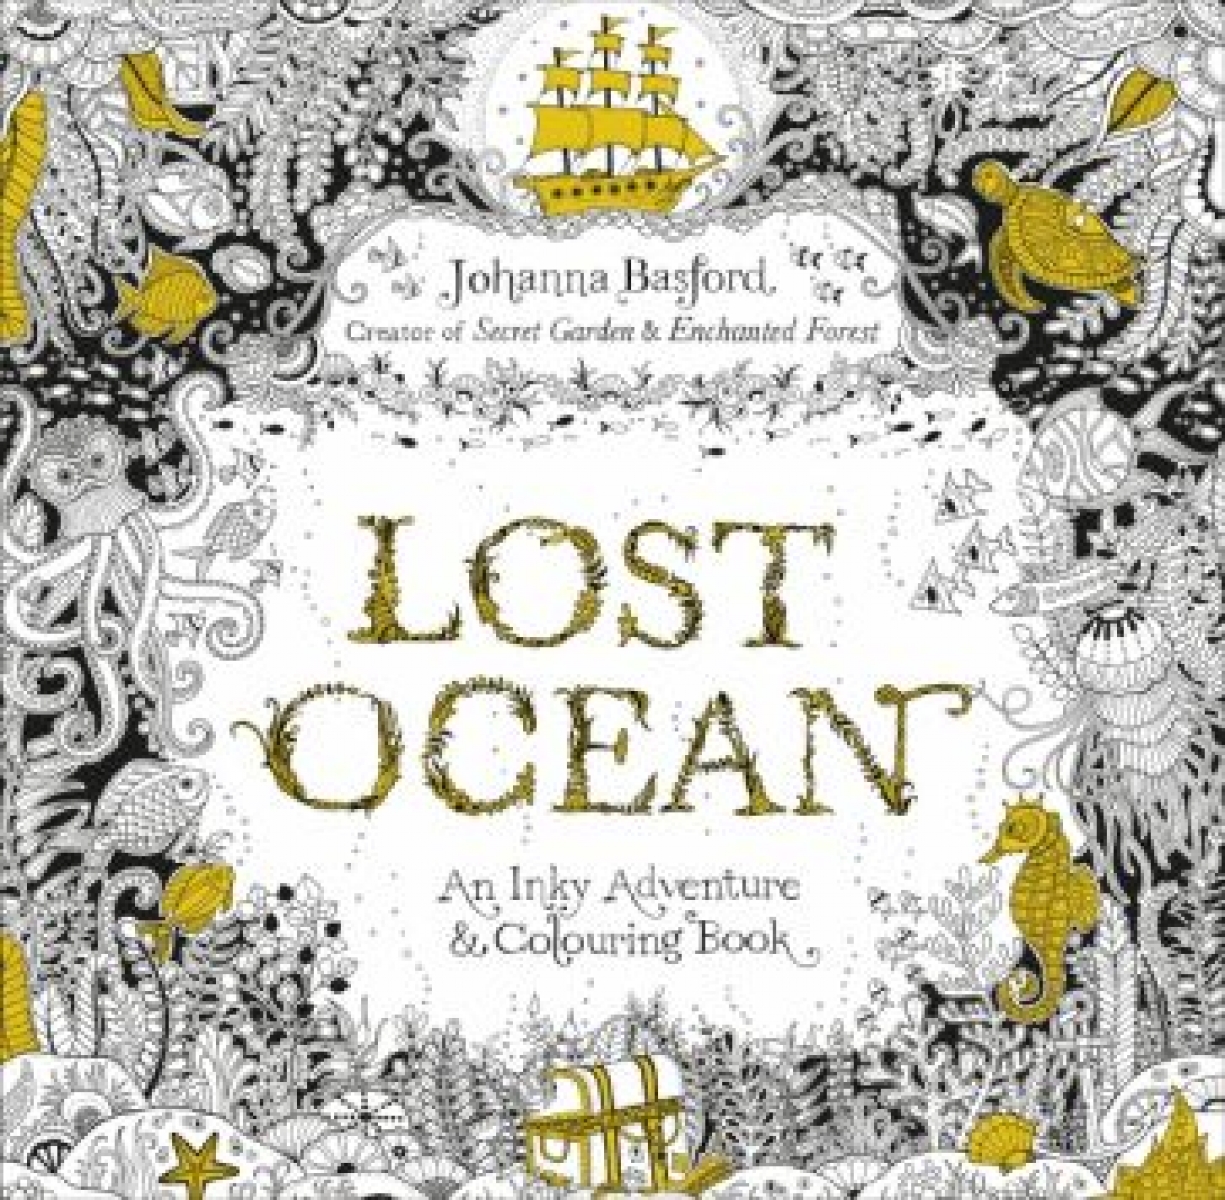 Johanna B. Lost Ocean. An Inky Adventure & Colouring Book 